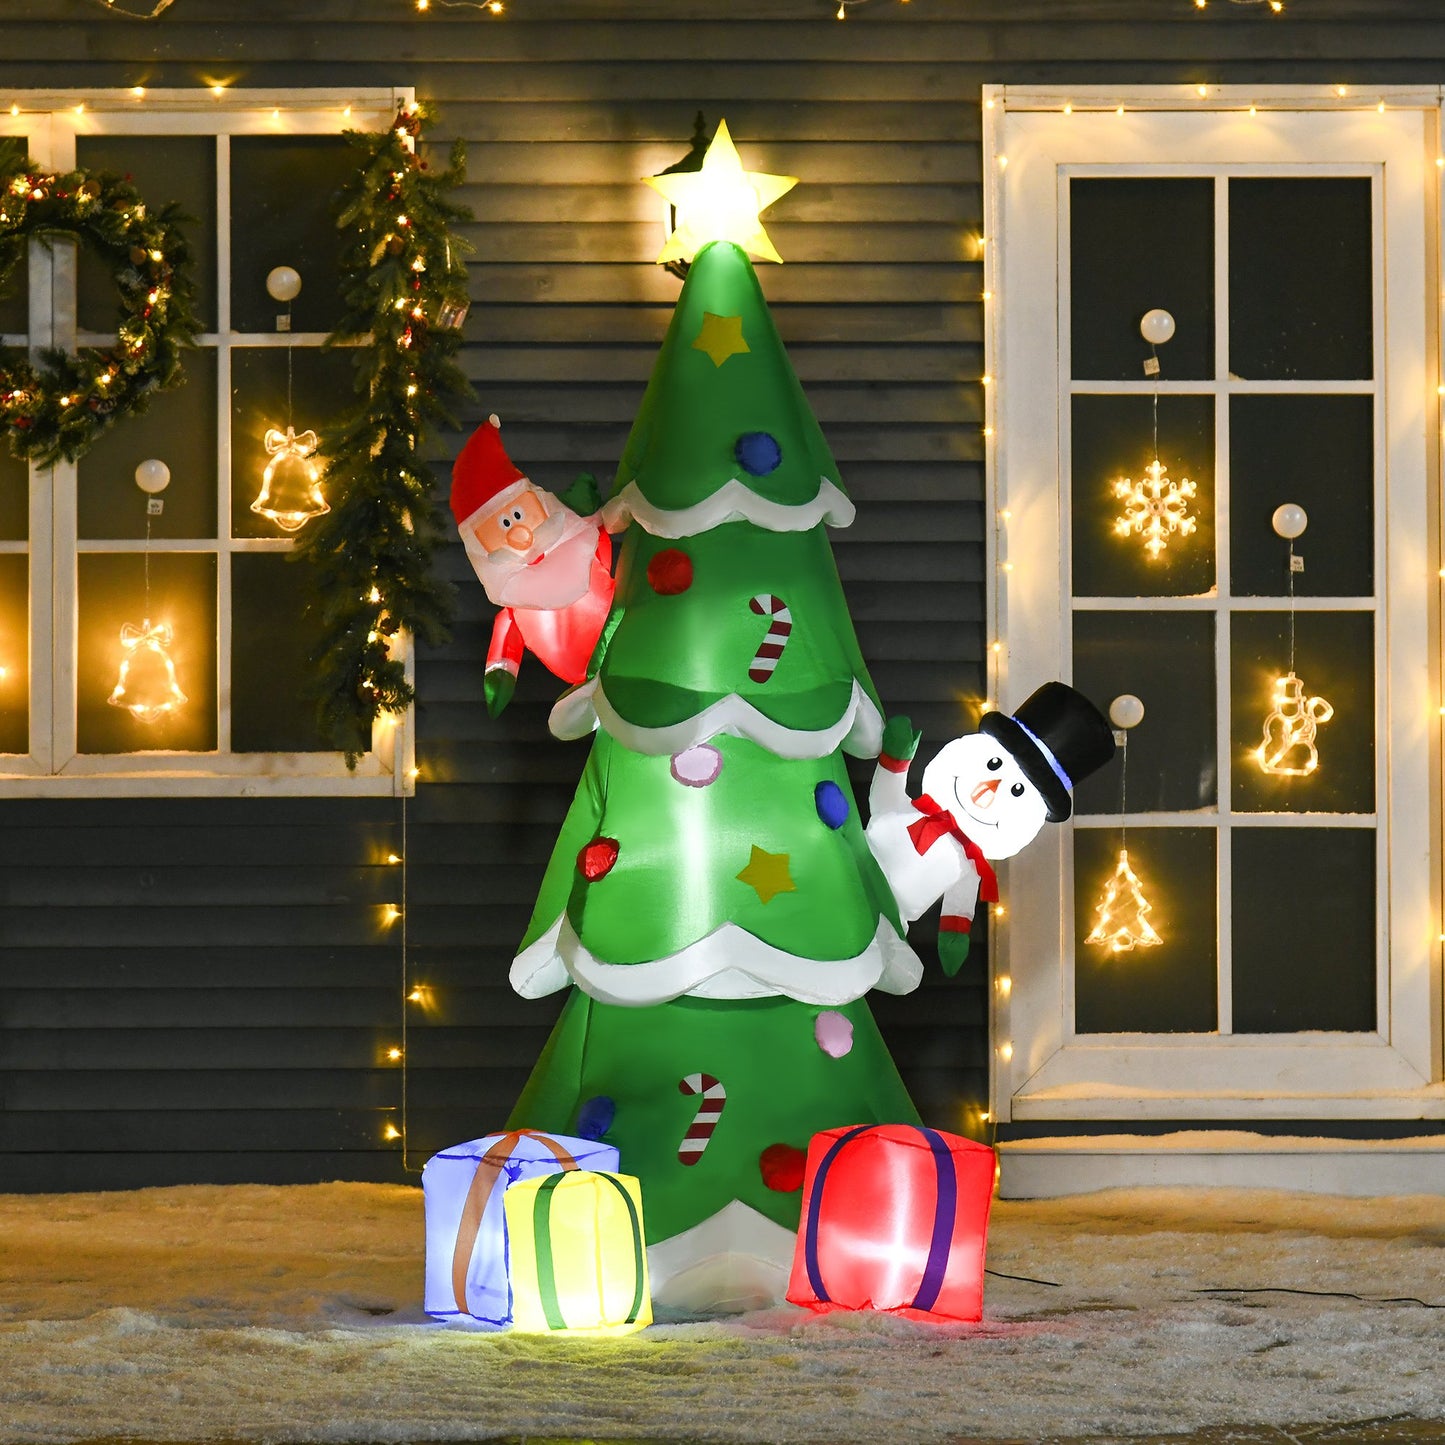 HOMCOM 7 Feet Tall Christmas Inflatable Tree, LED Lighted with Santa